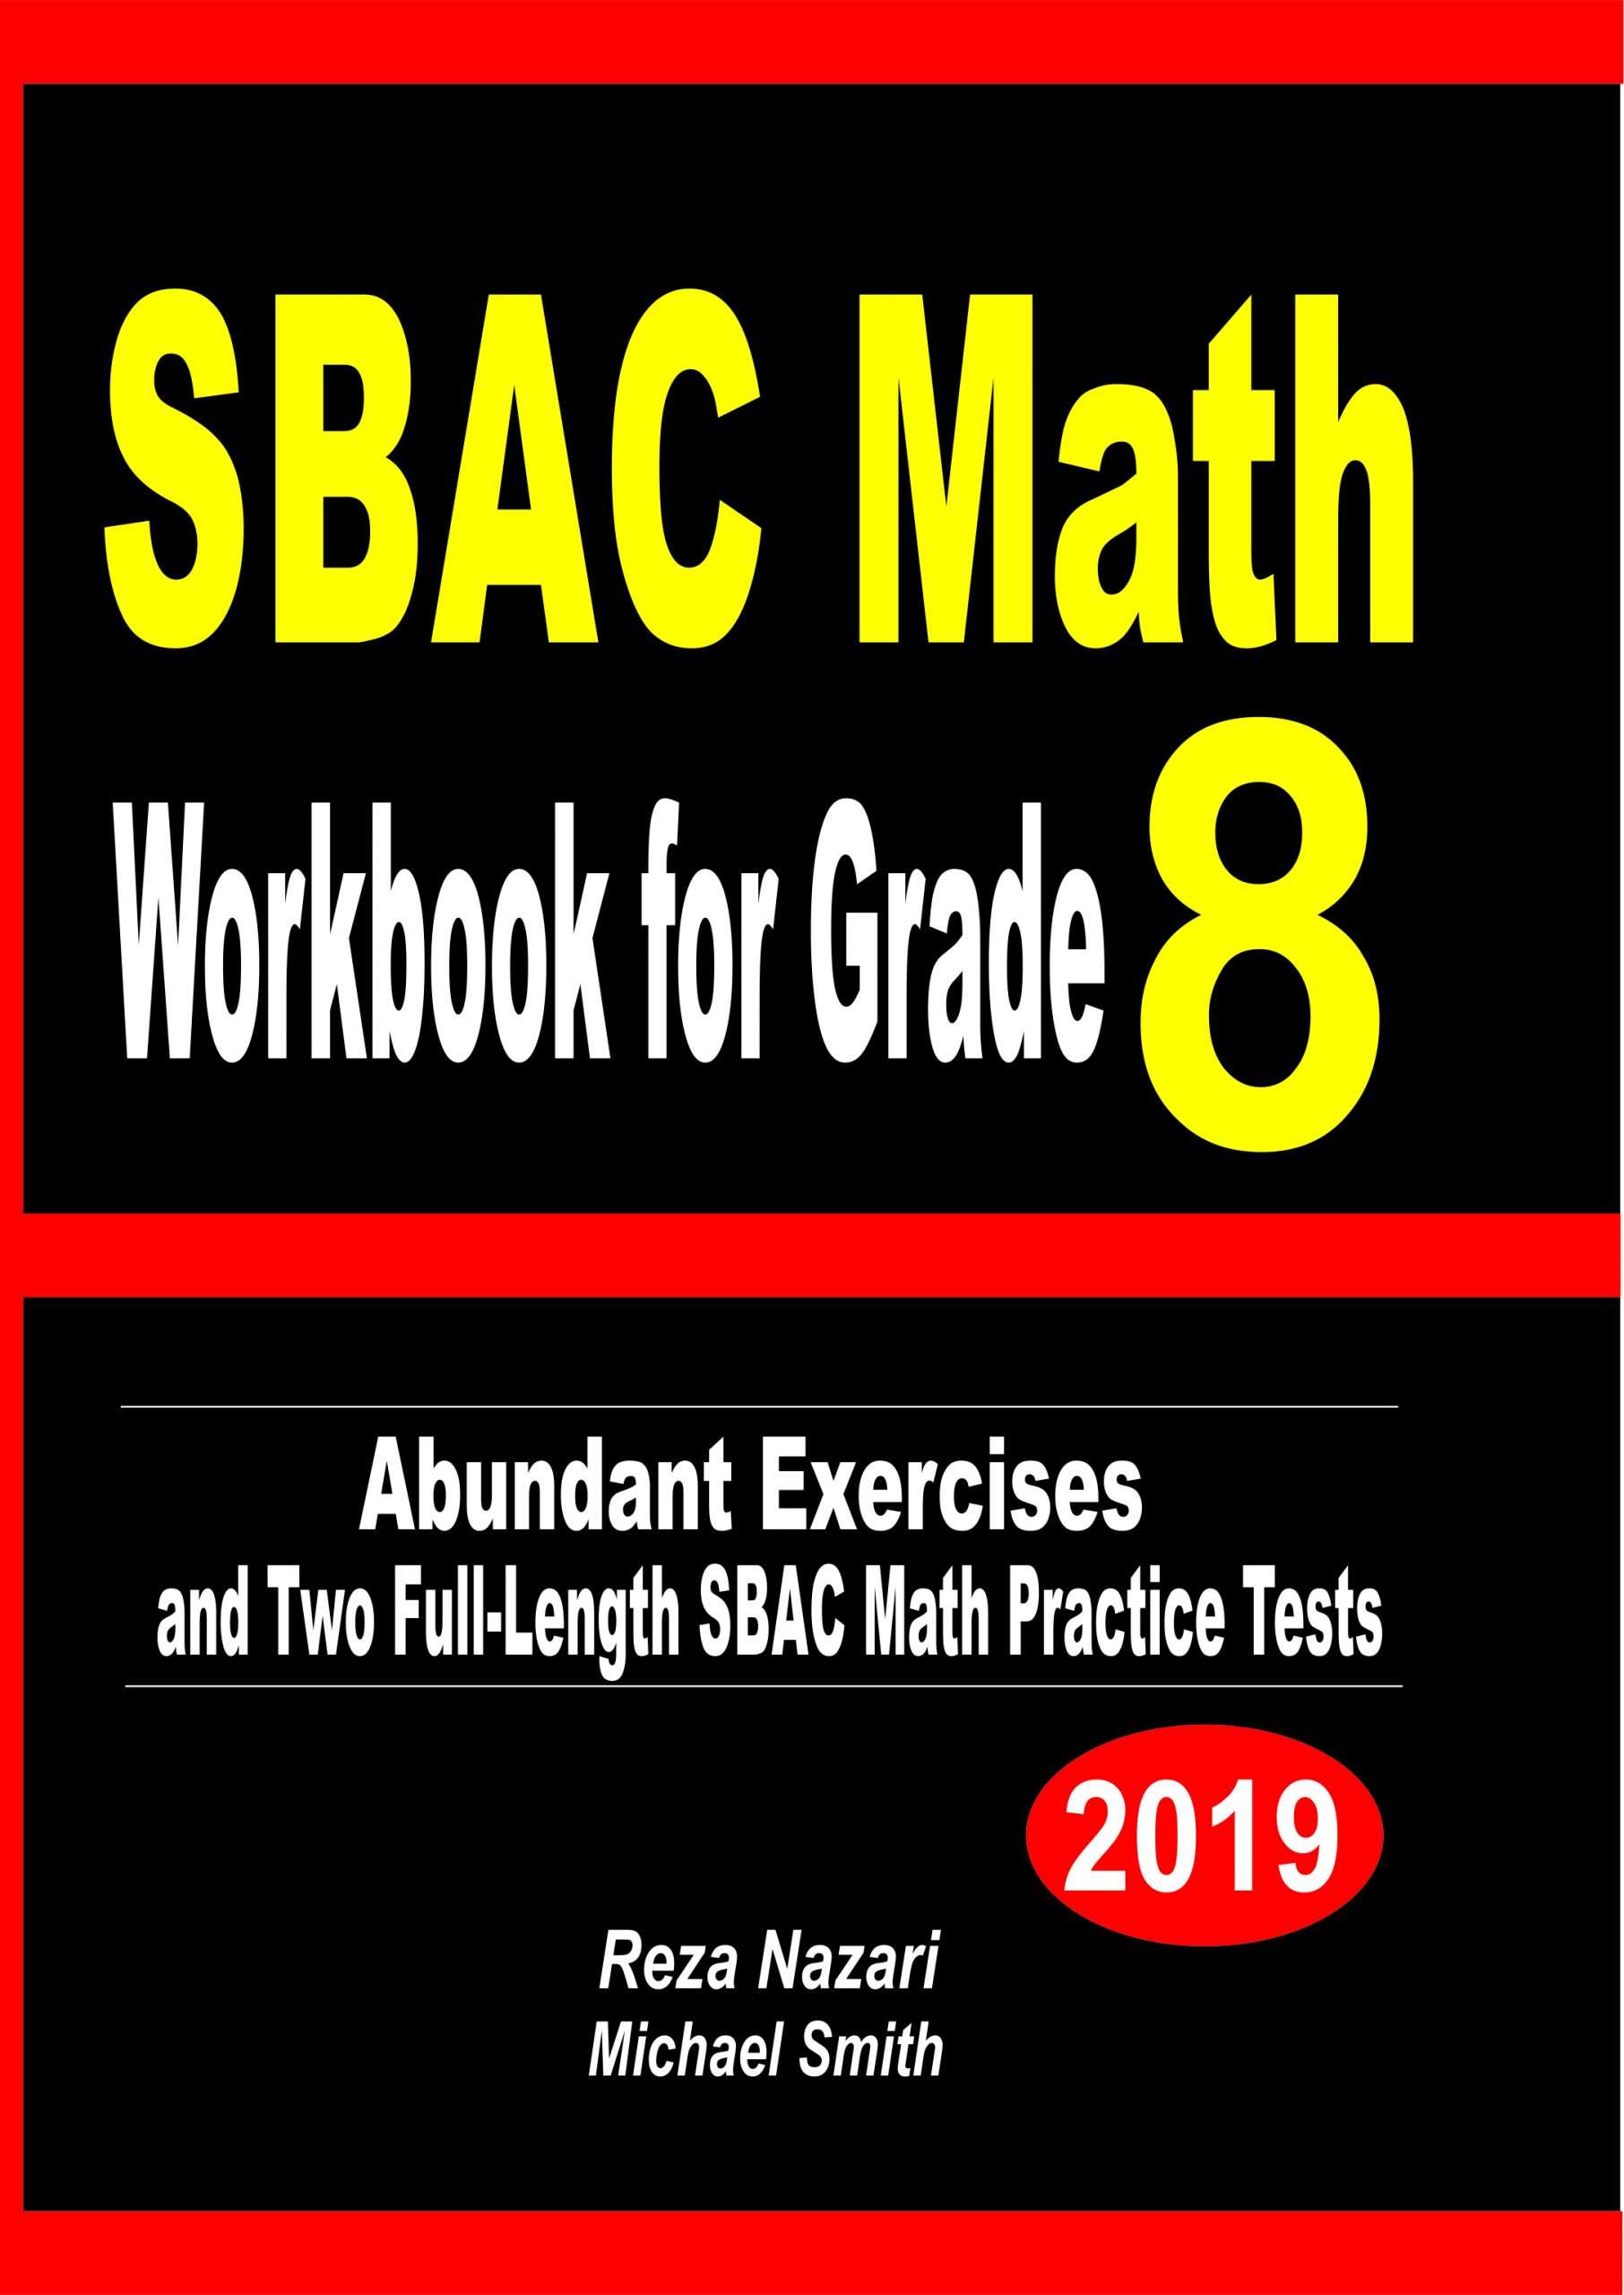 SBAC Math Workbook: Abundant Exercises and Two Full